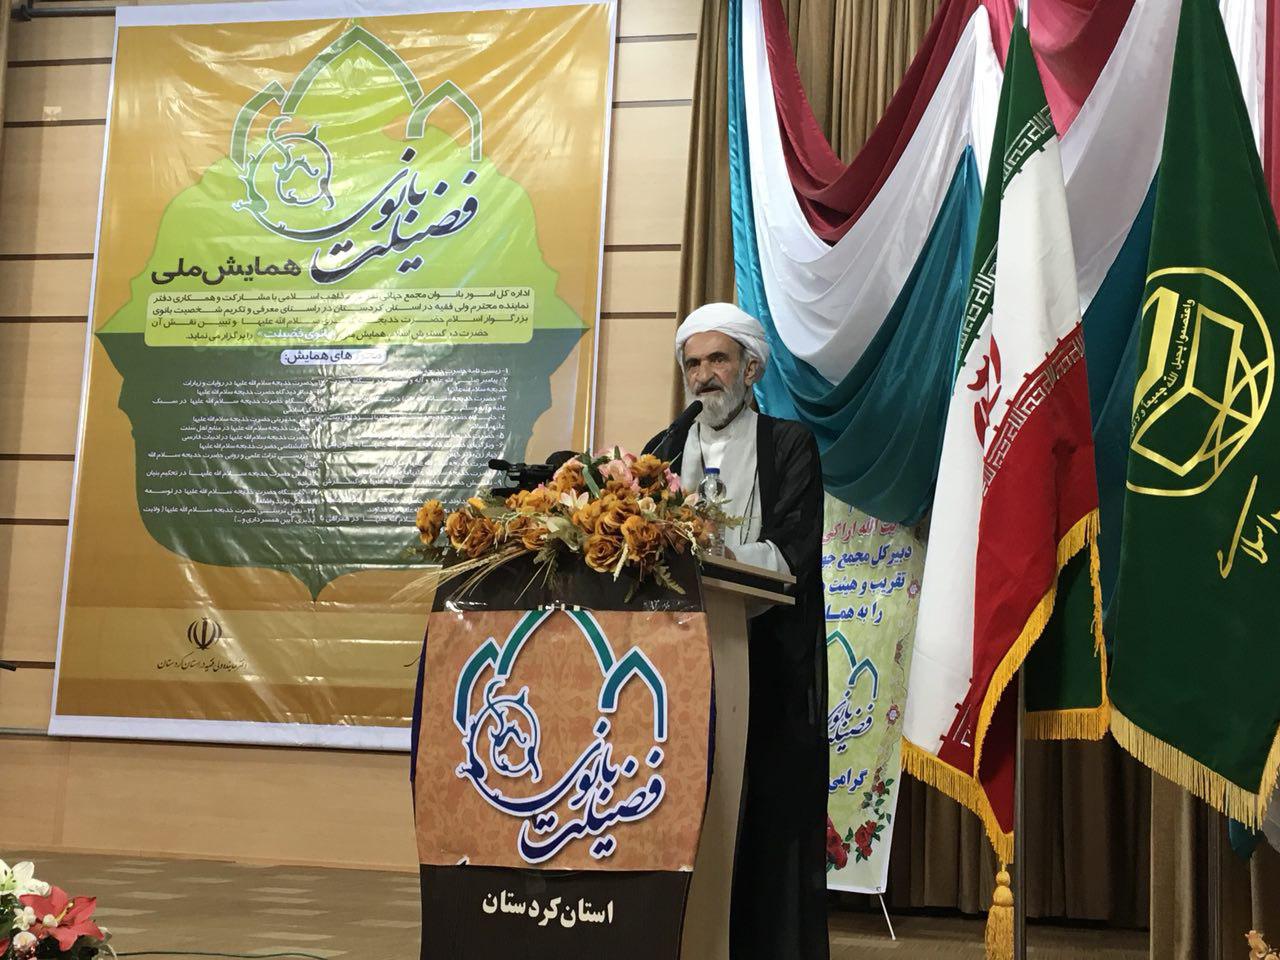 Conferenza sulla figura di Hazrat Khadijah in Iran